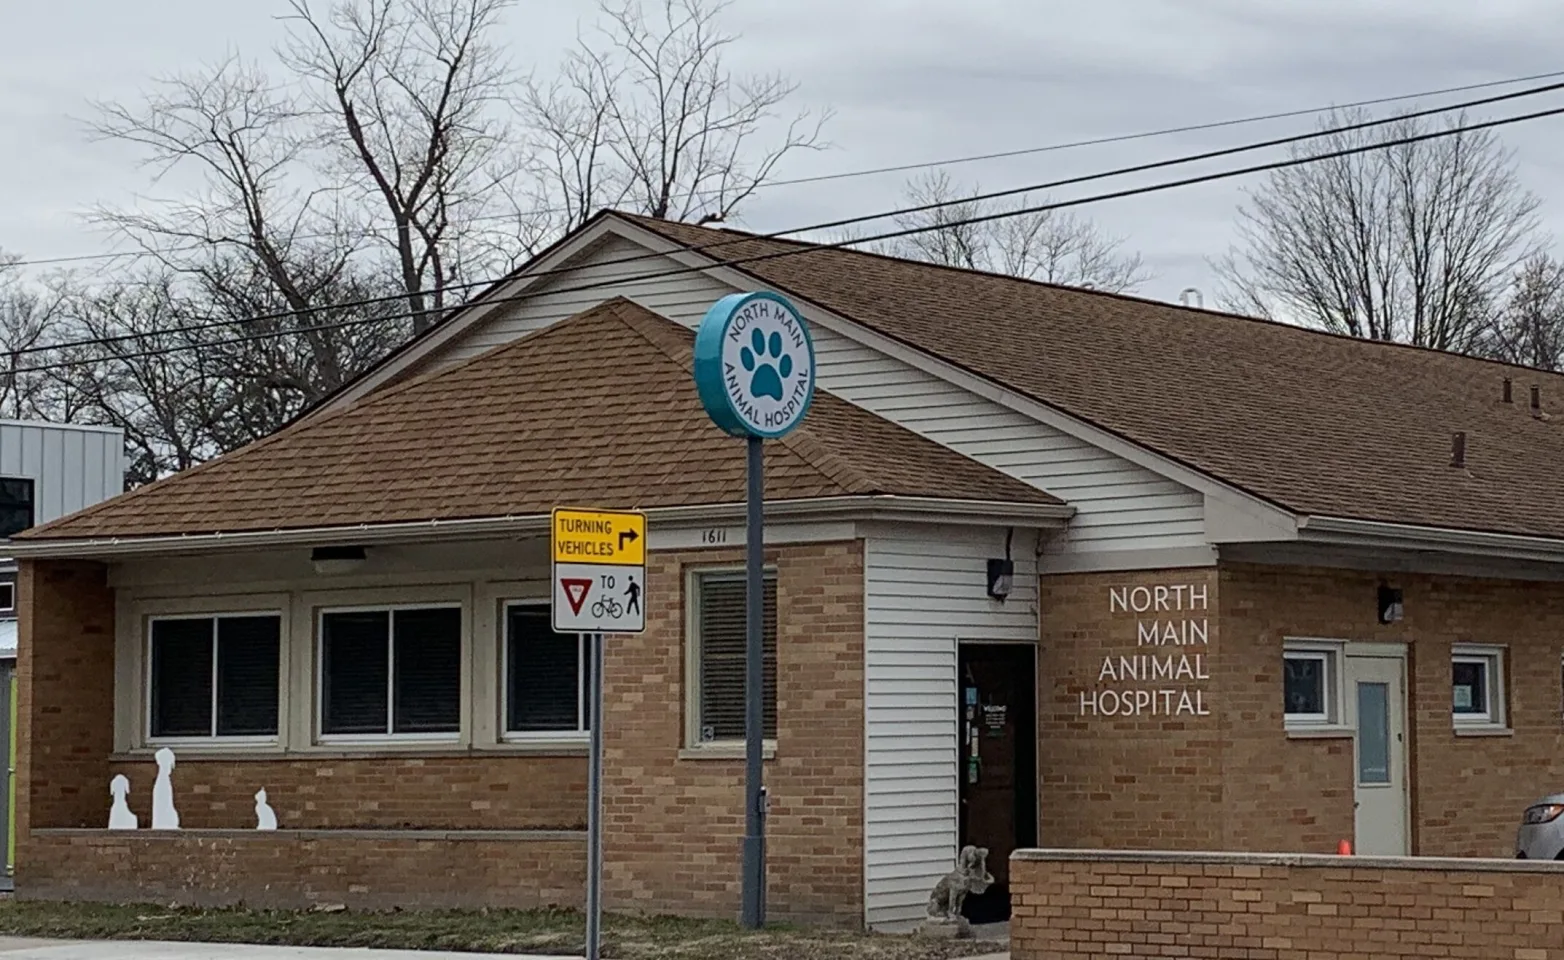 Entrance to North Main Animal Hospital facility